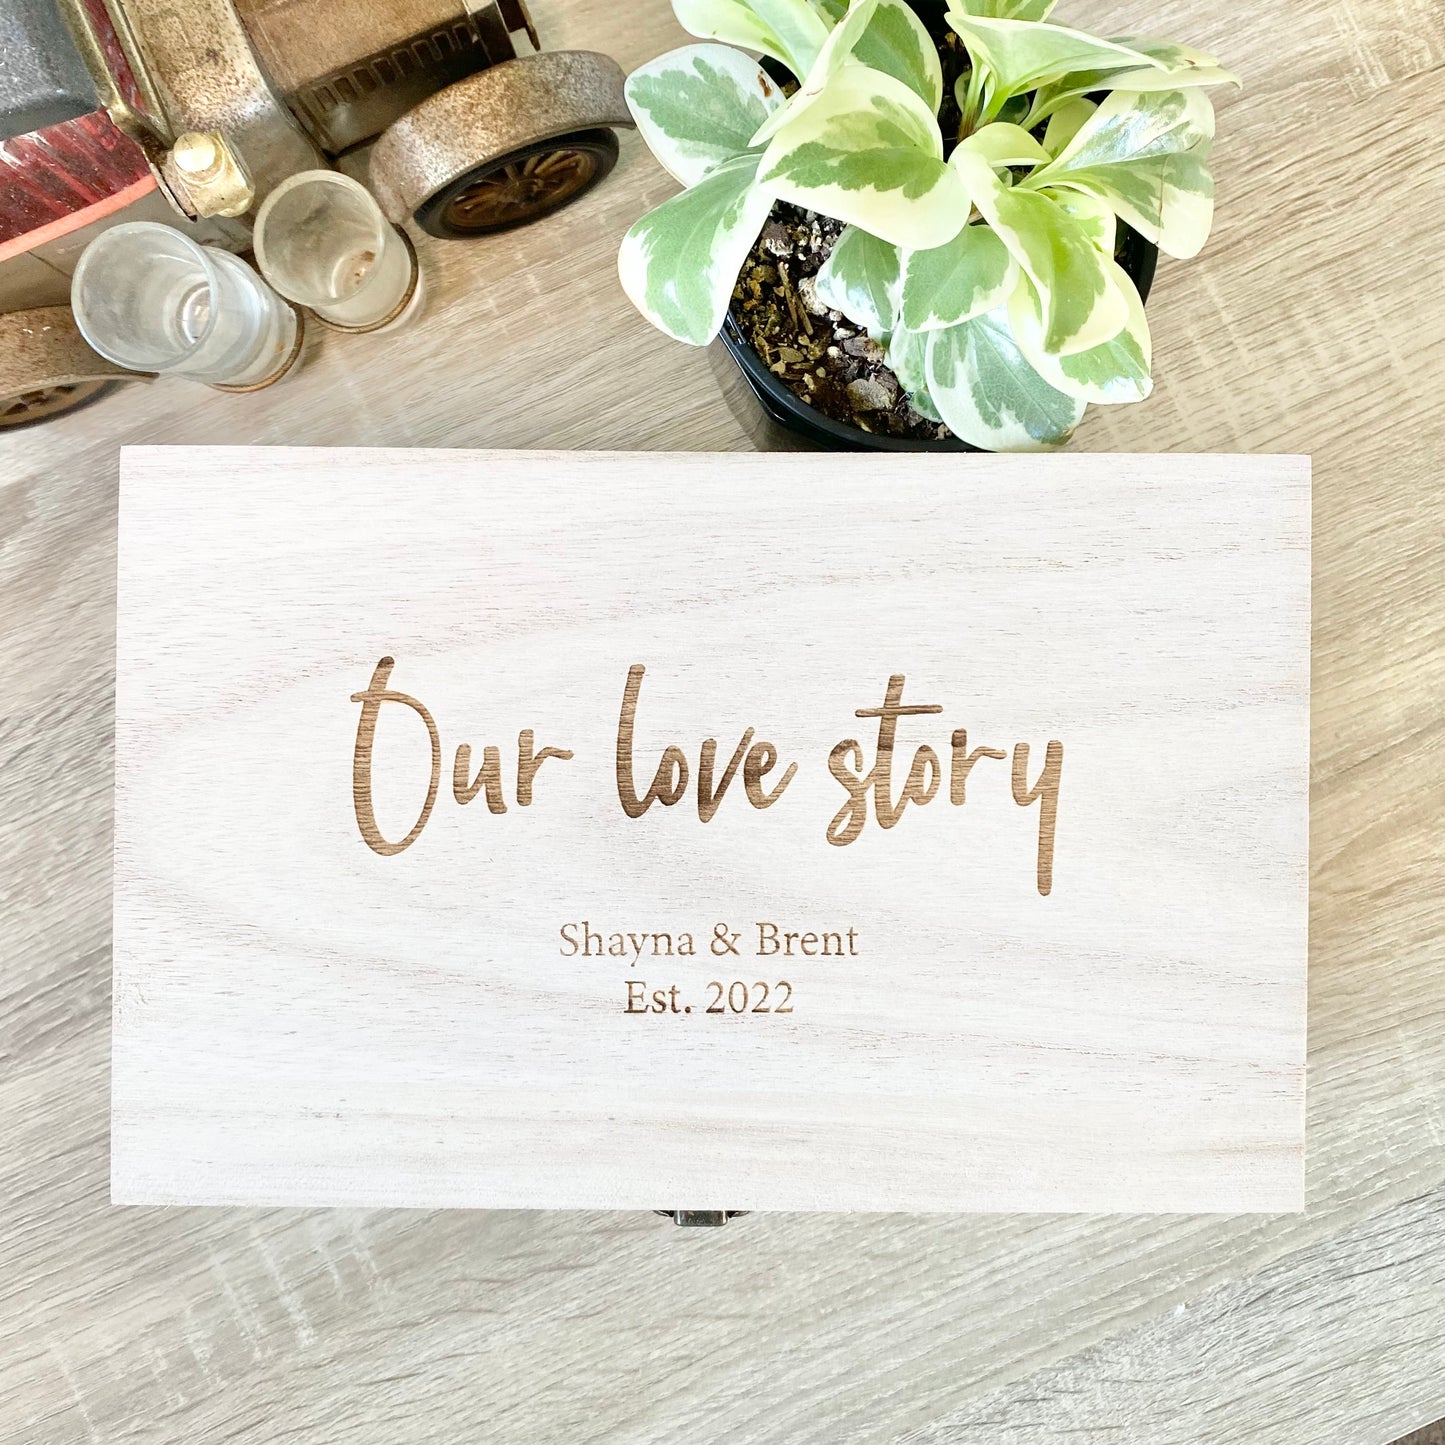 Our love story keepsake box